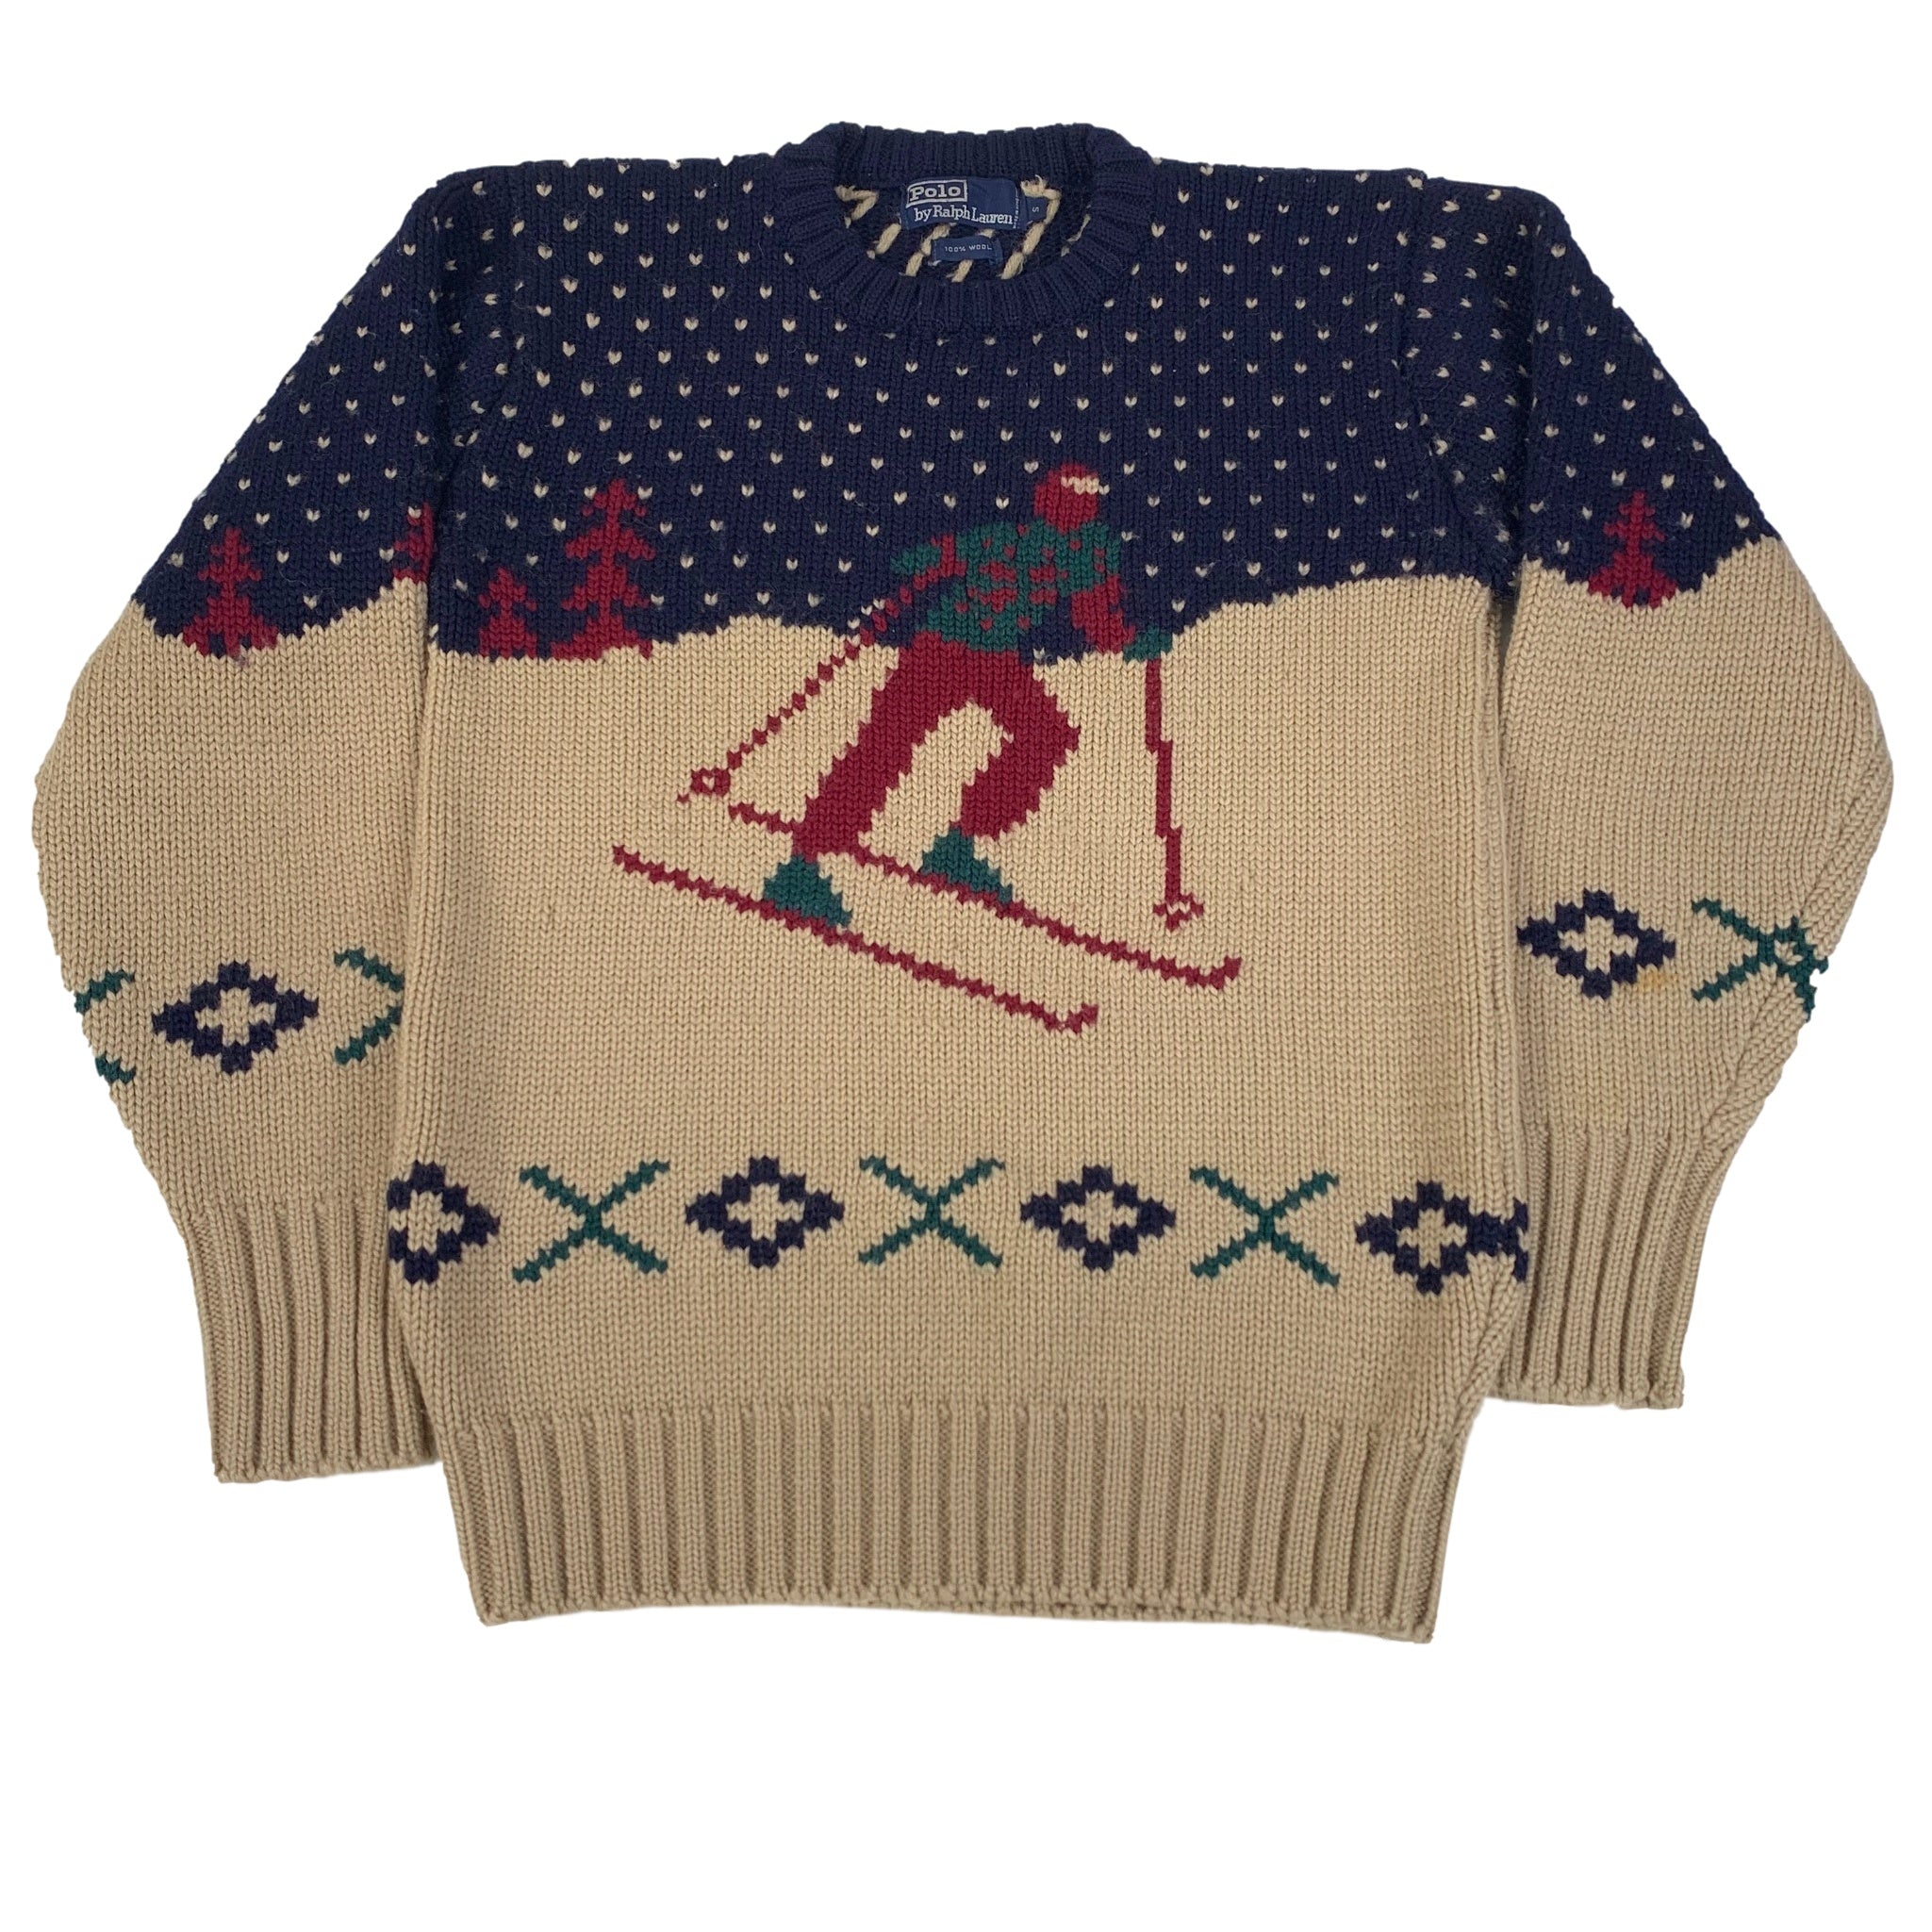 ralph lauren ski sweater